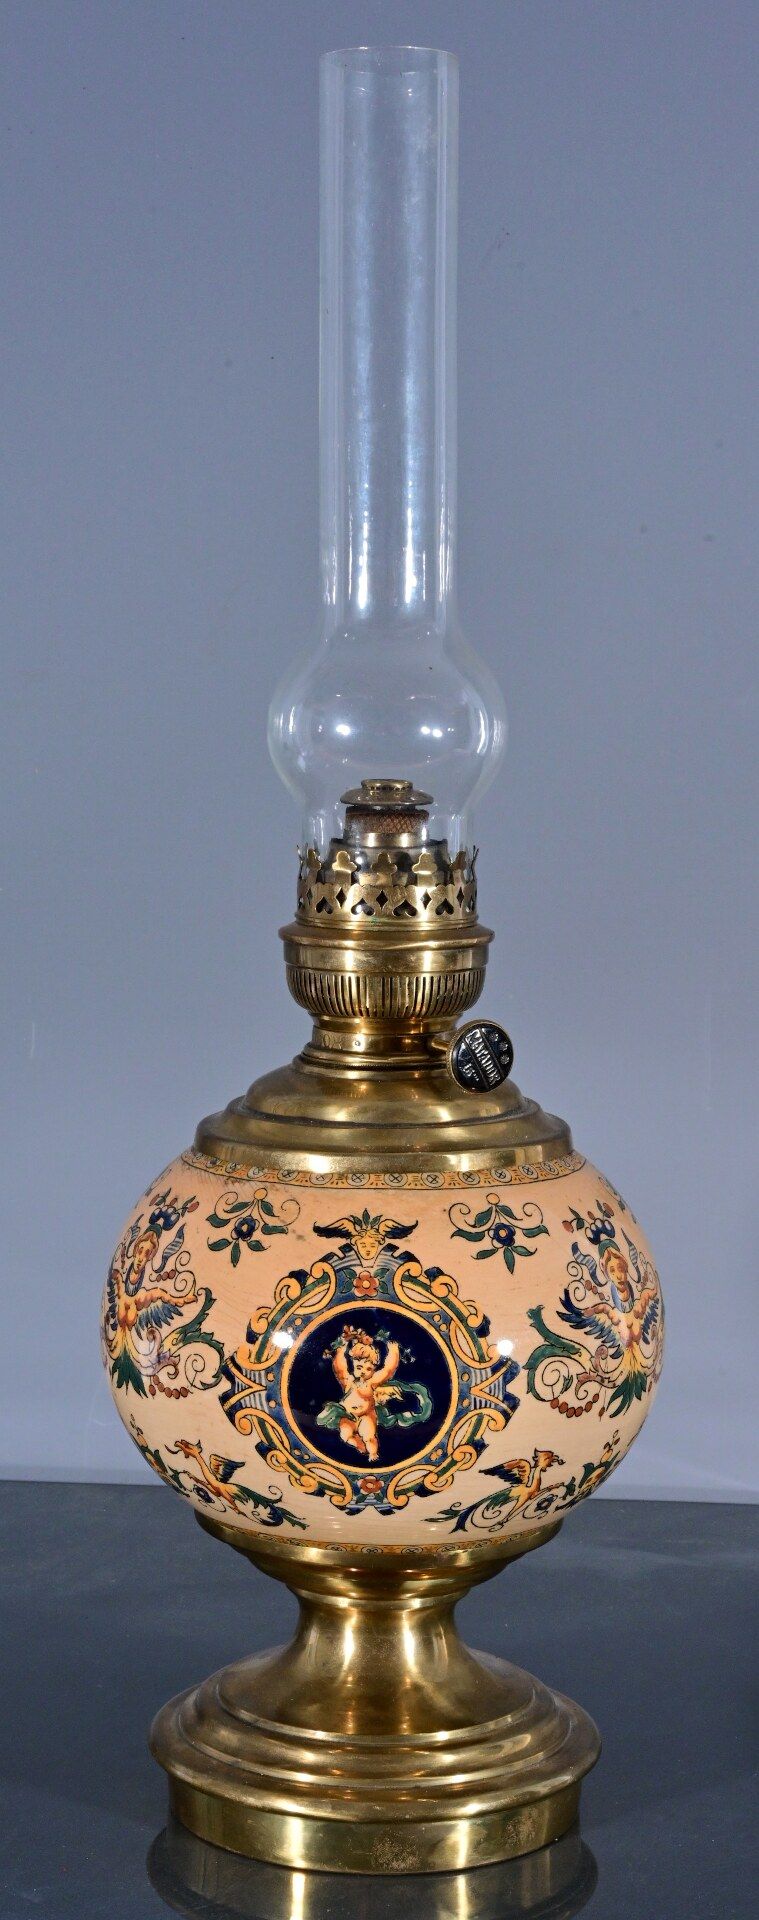 Ältere Petroleumlampe mit "MATADOR" - Brenner, Historismus, 20. Jhdt. Schöner, liebevoll gepflegter - Bild 2 aus 9